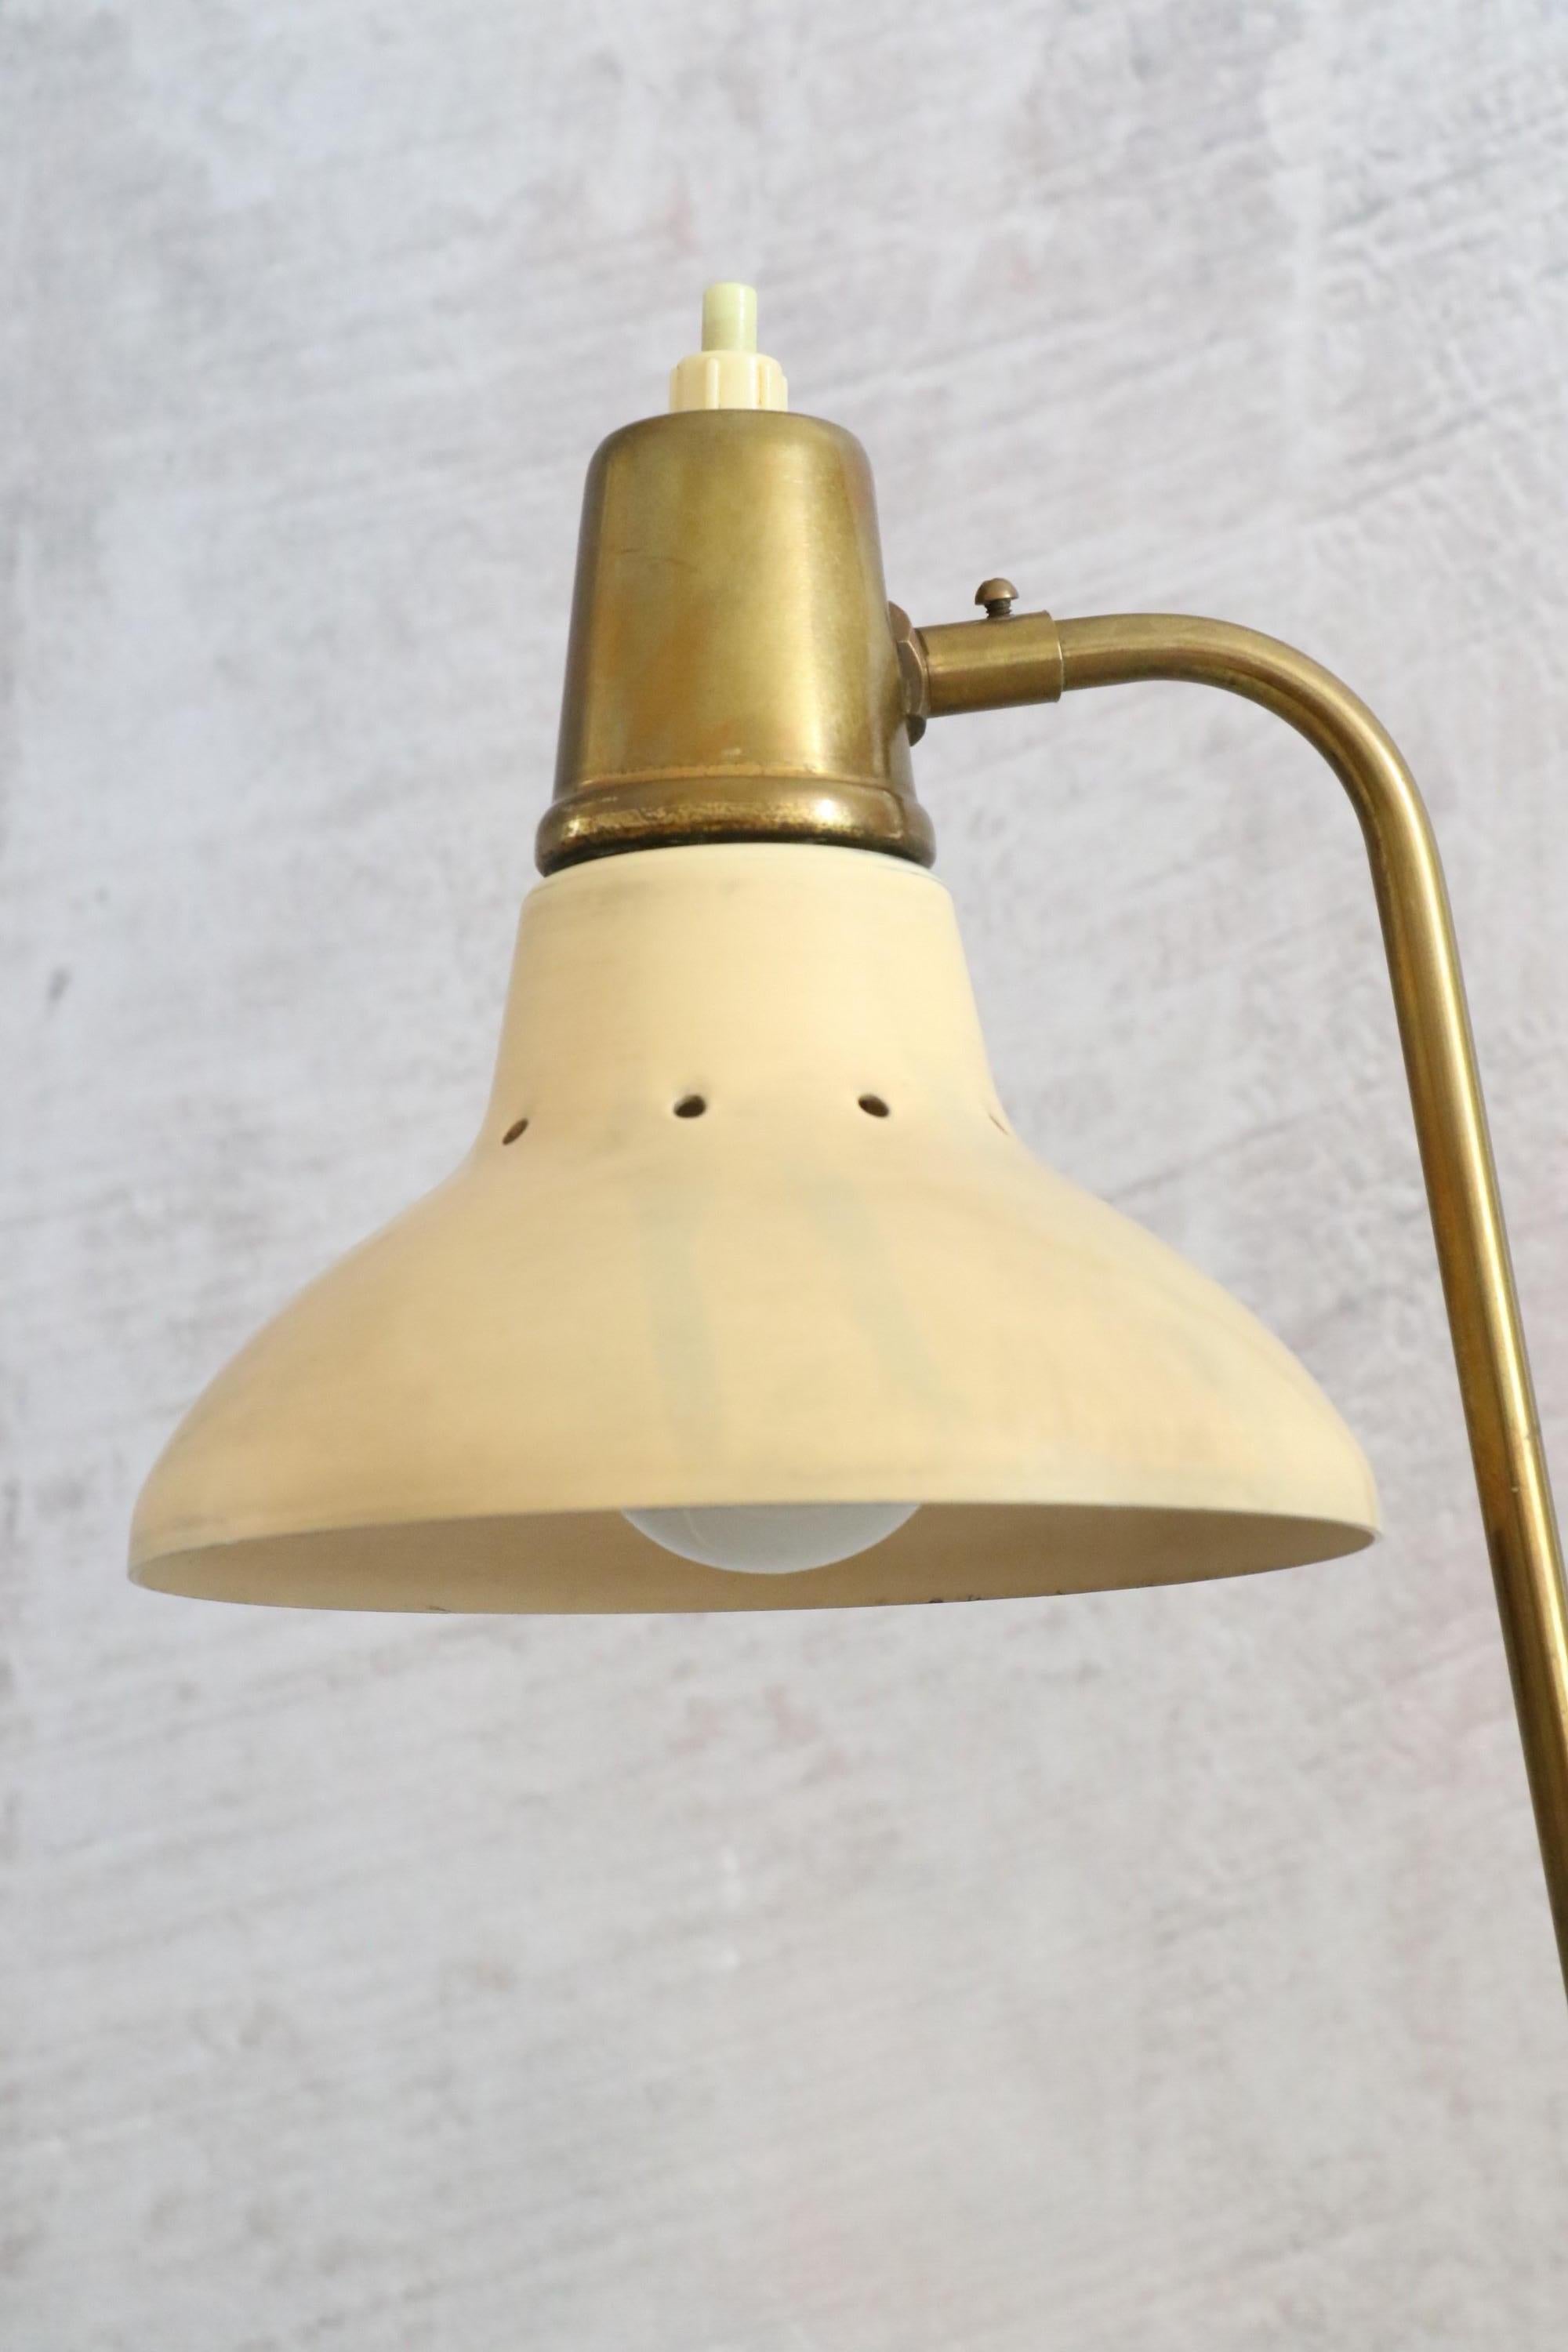 Robert Caillat Mid-Century Modern French Table Lamp 1950 Era Biny Guariche 4